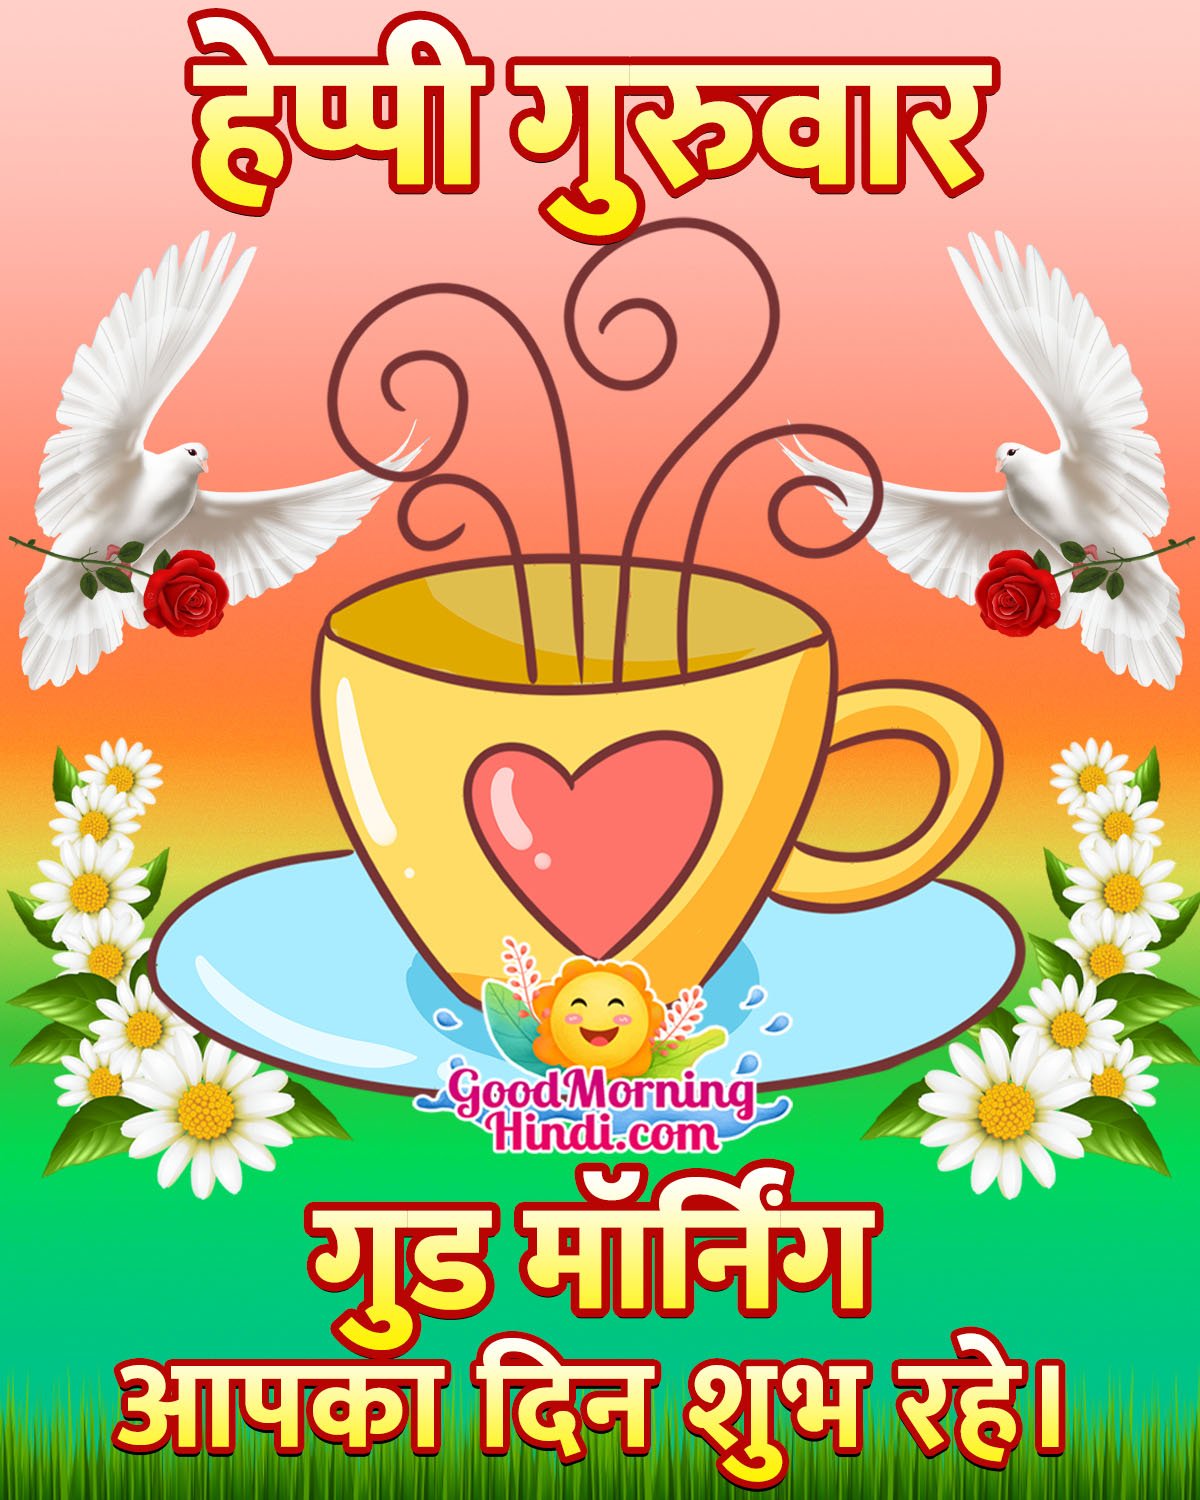 Happy Guruvar Good Morning Image